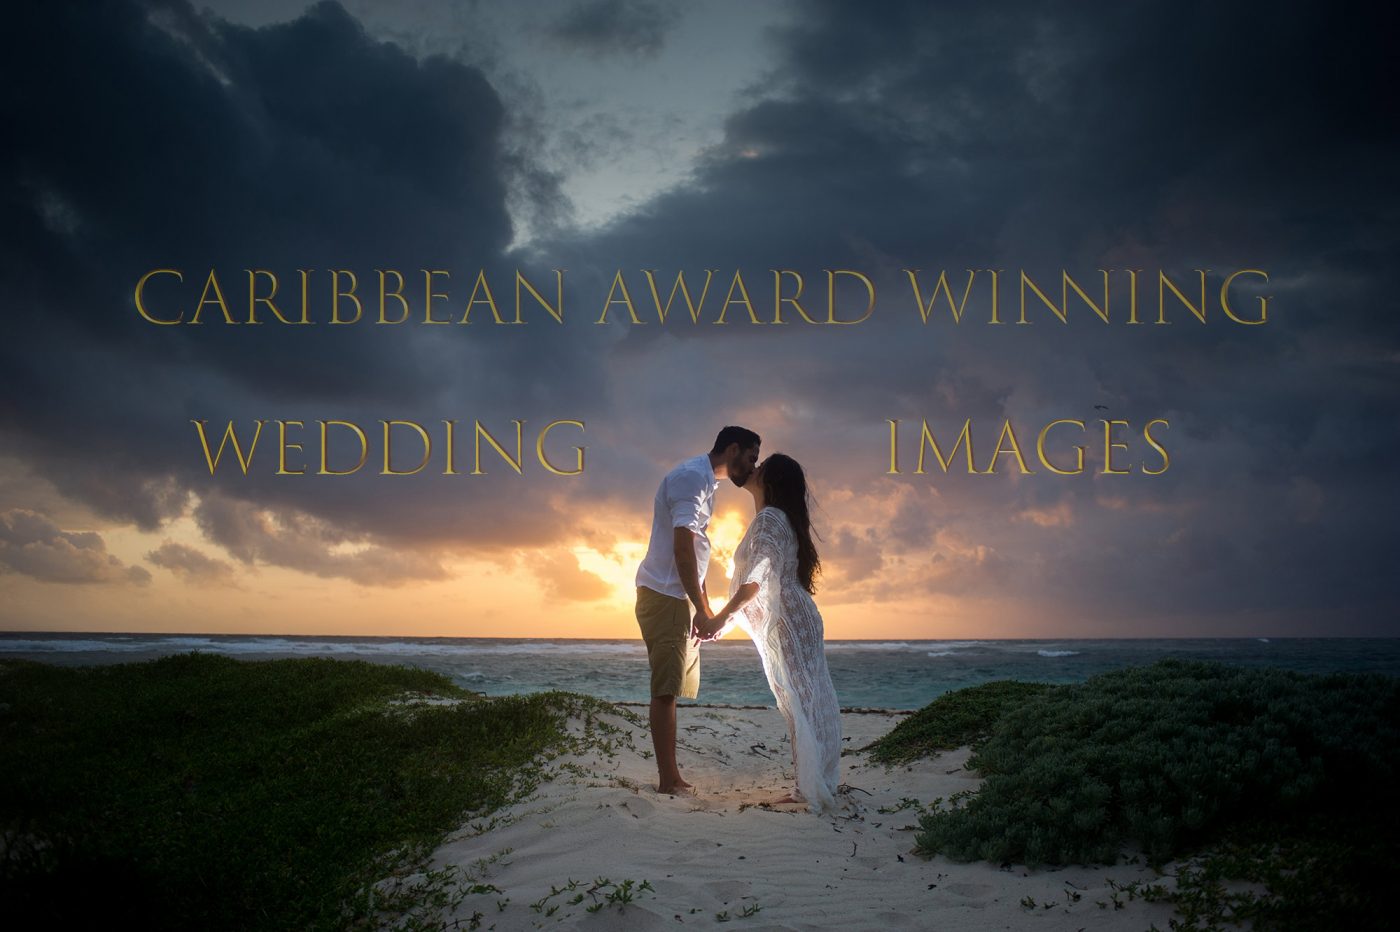 Award winning wedding photography